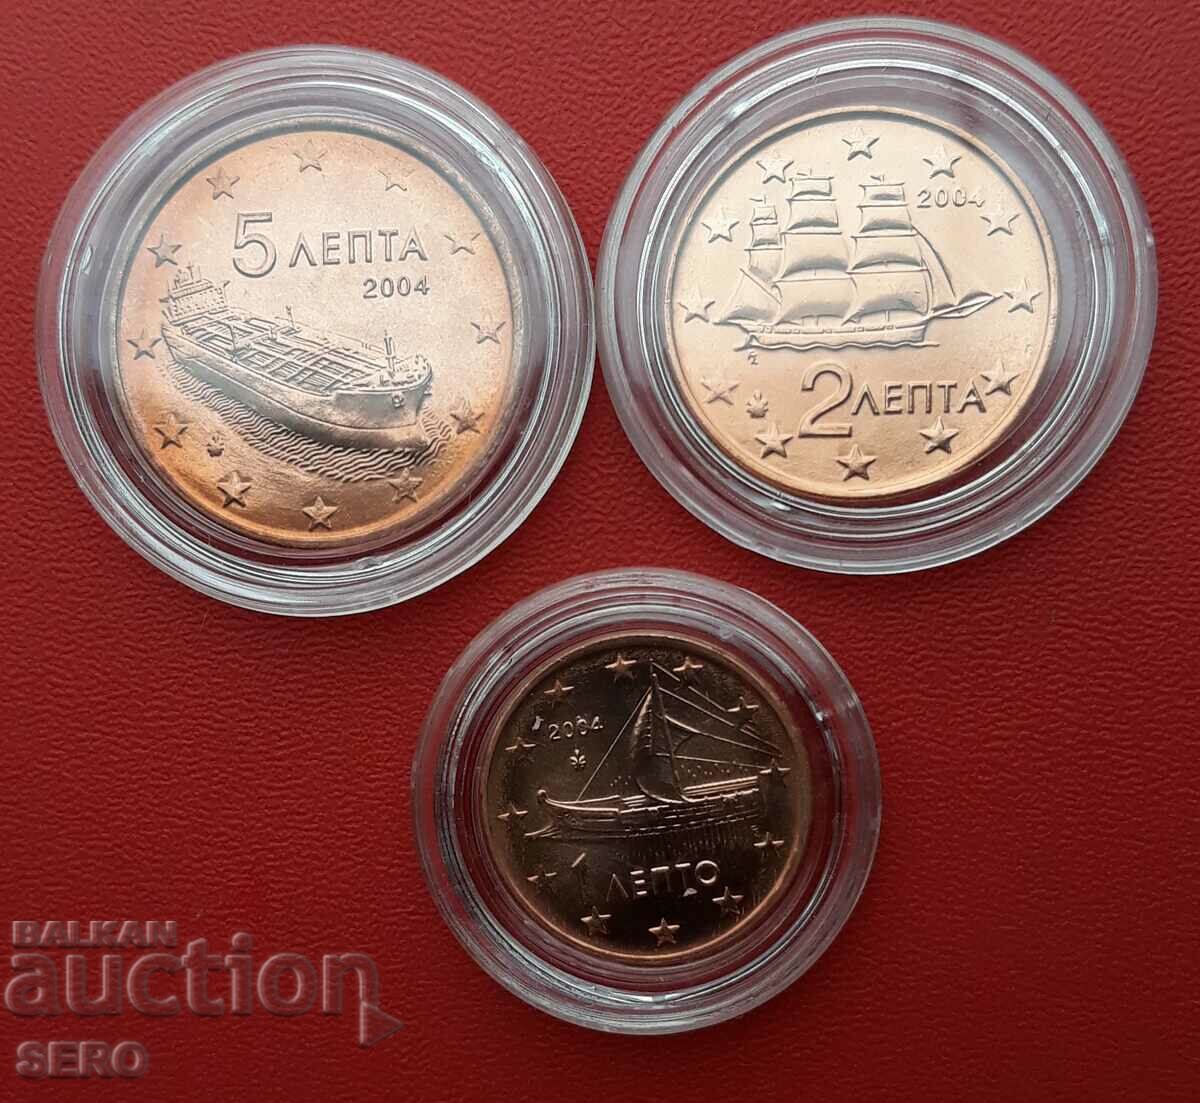 Grecia-lot 3 monede euro 2004 în capsule